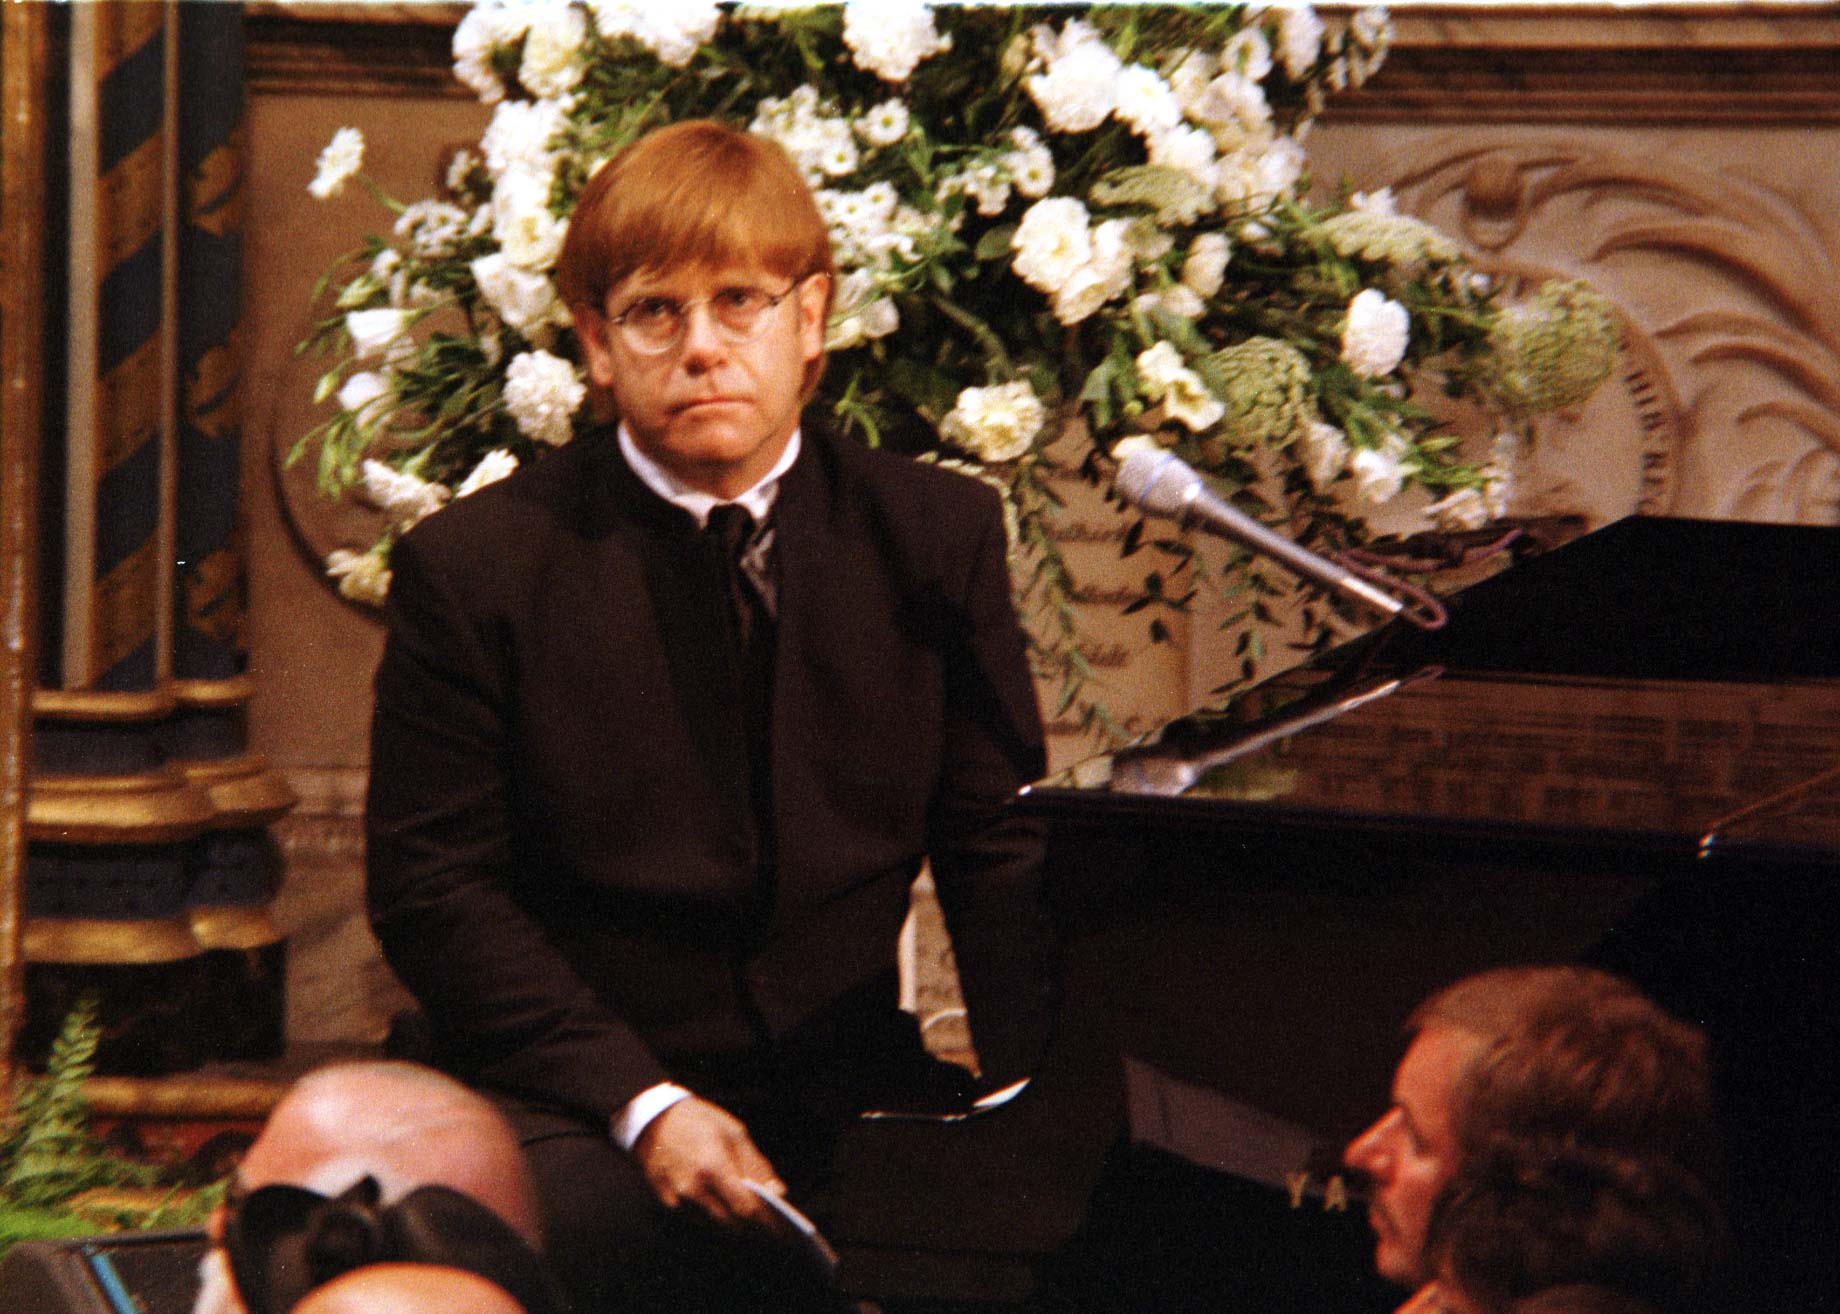 Elton John at a piano during Princess Diana's funeral